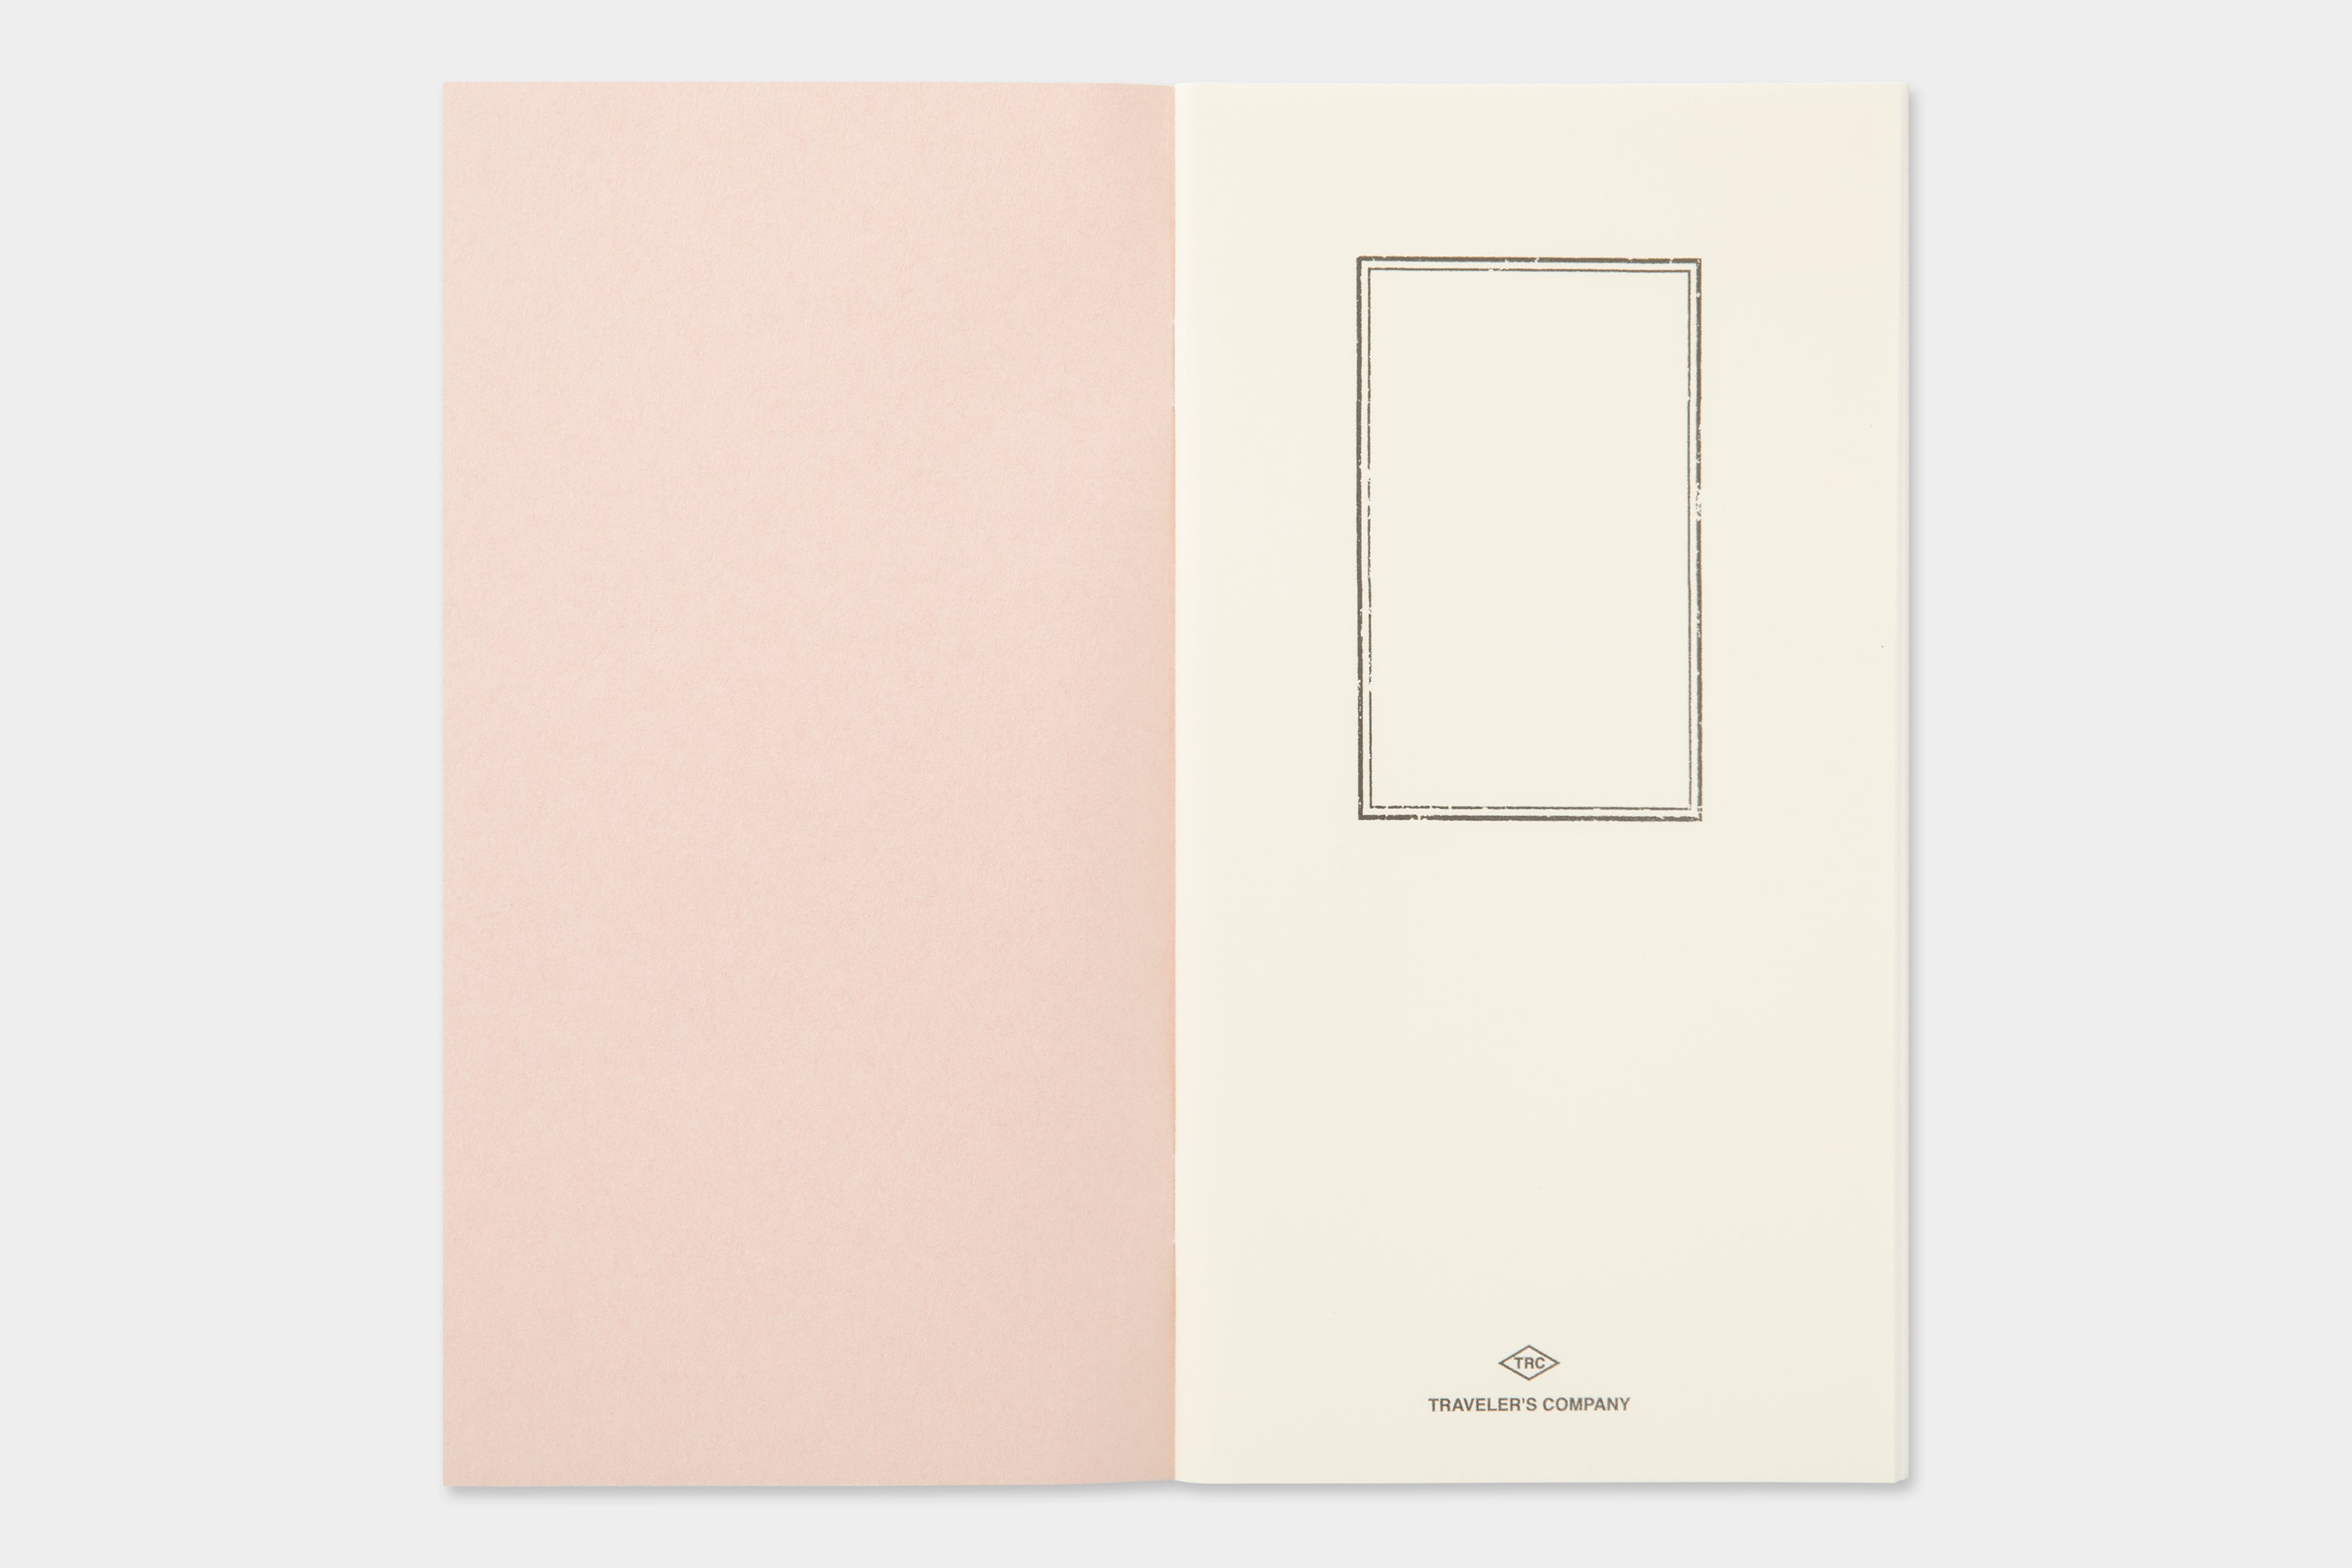 TRAVELER'S notebook Sticker Release Notebook- Regular Size — Two Hands  Paperie